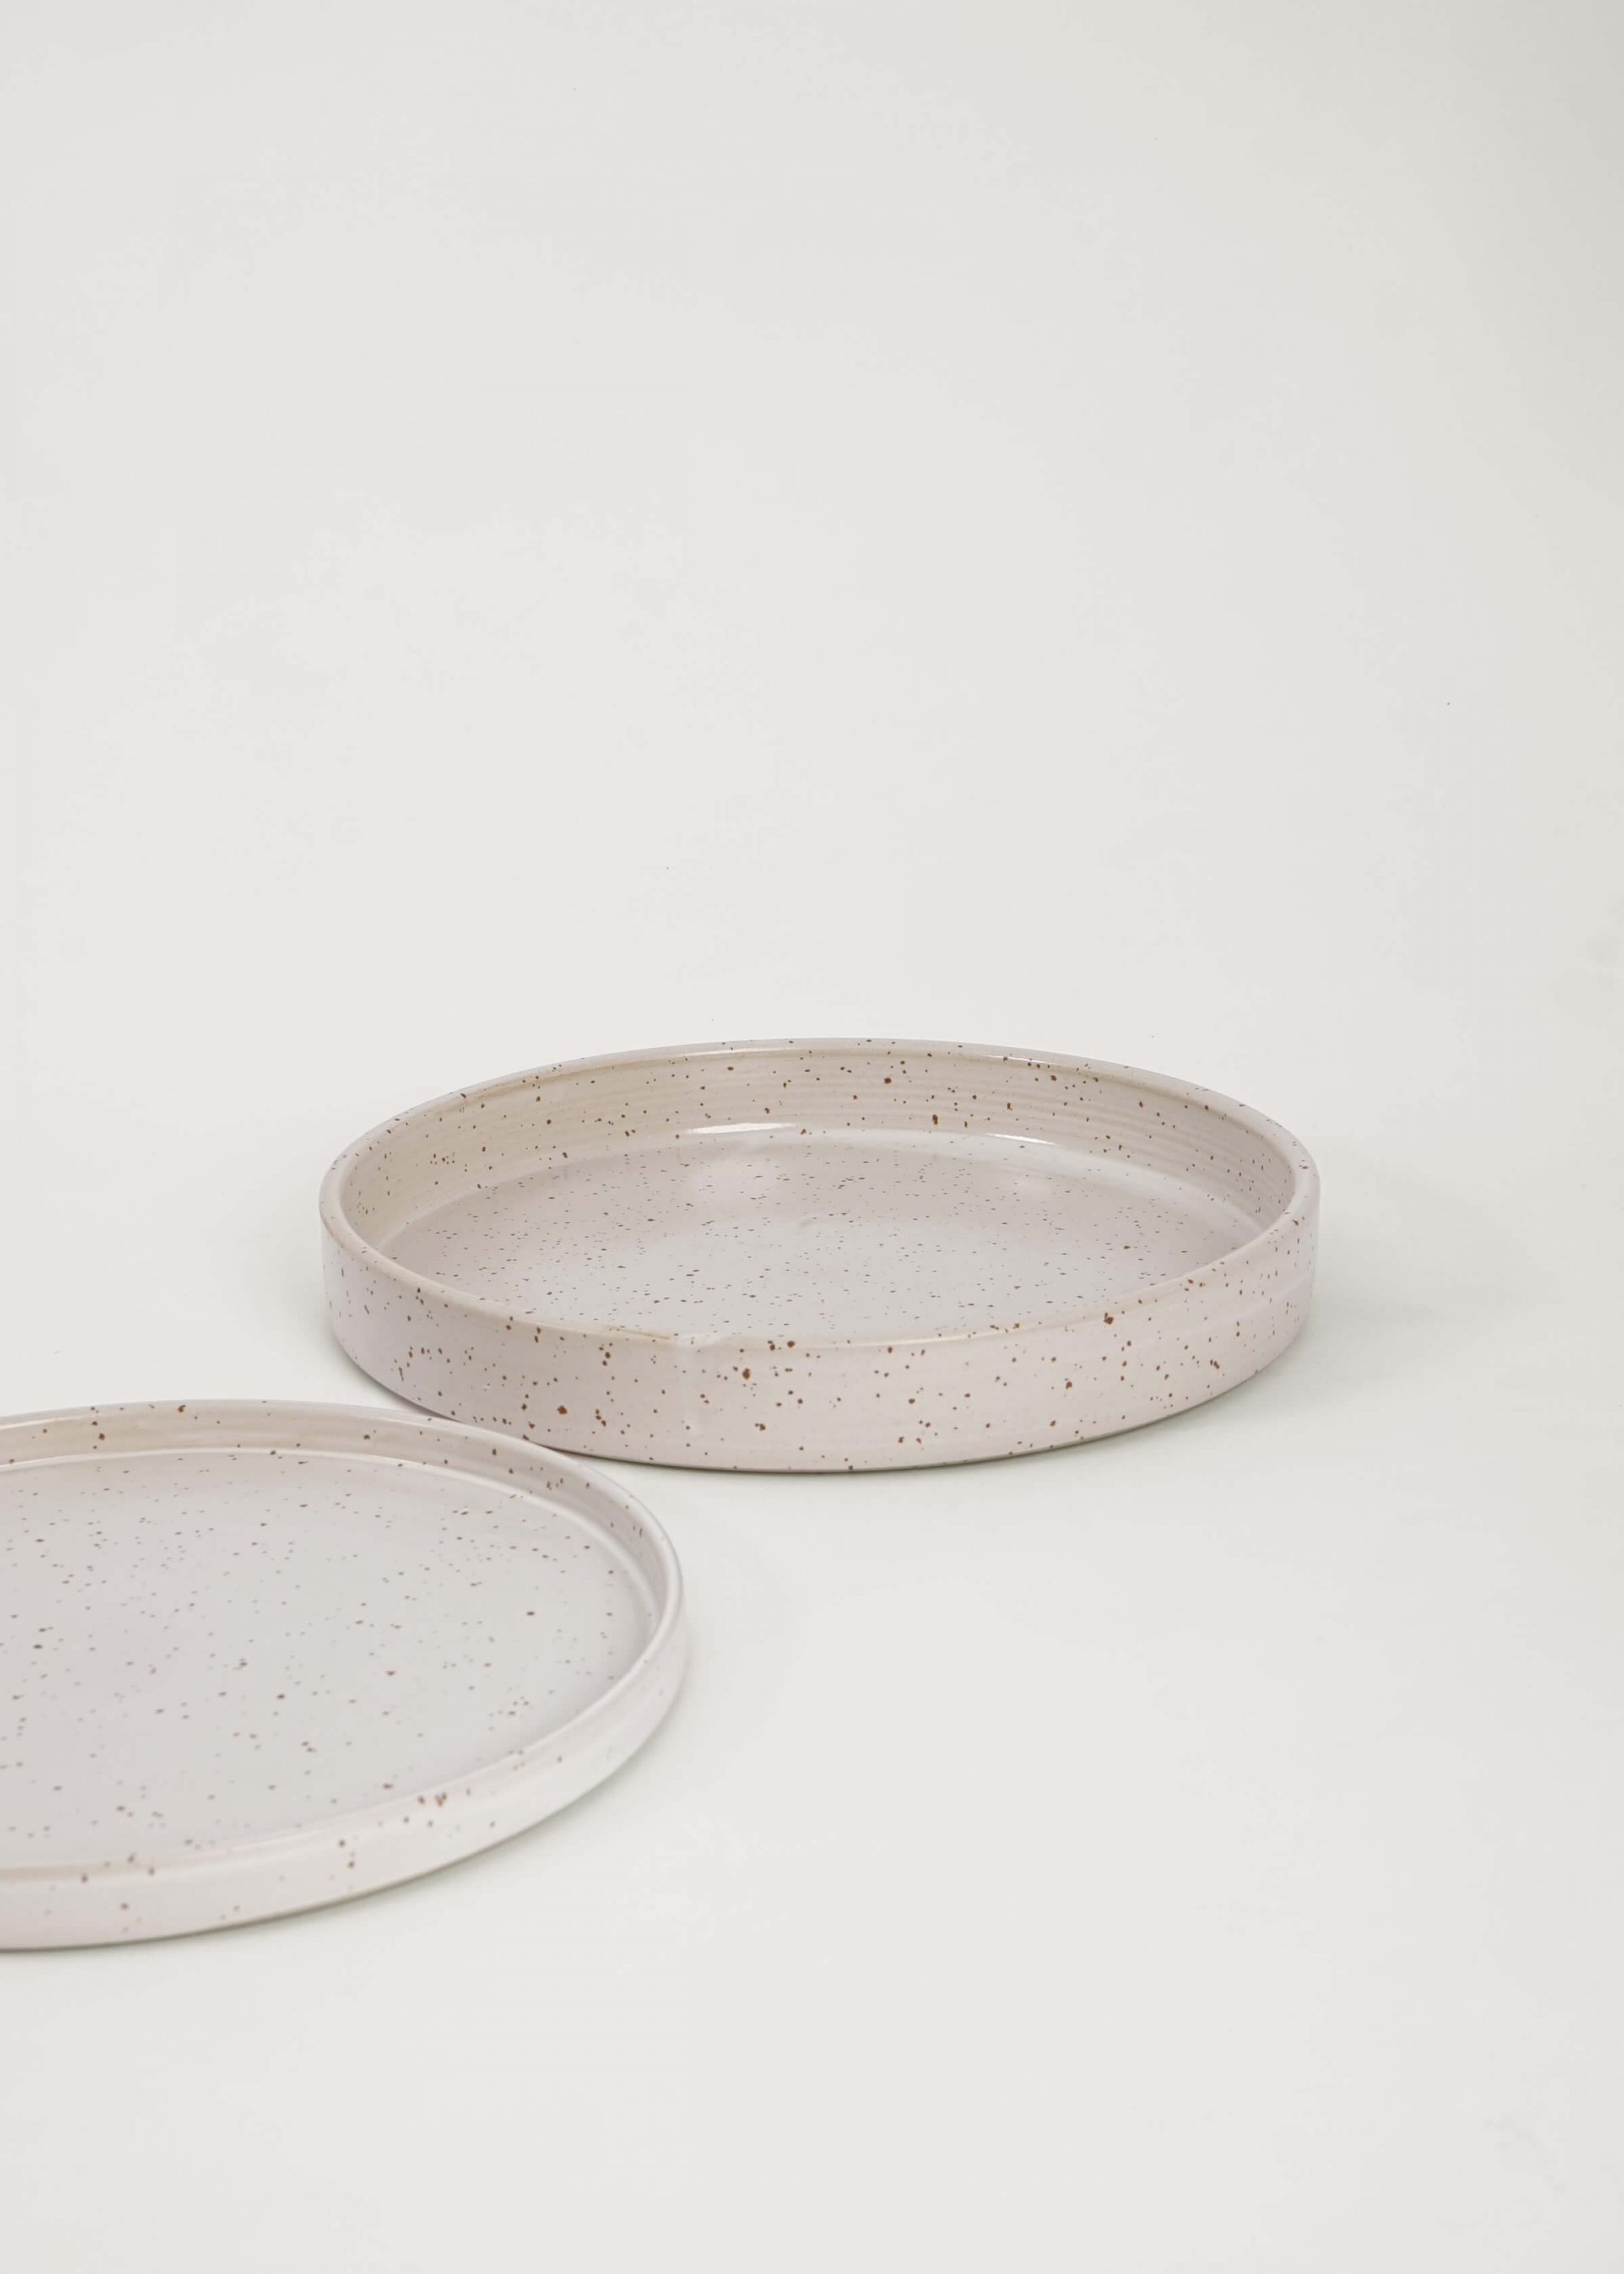 Product image for »Geodesic White« Large Tray Plate Ménage | Genuine Stoneware Ceramic